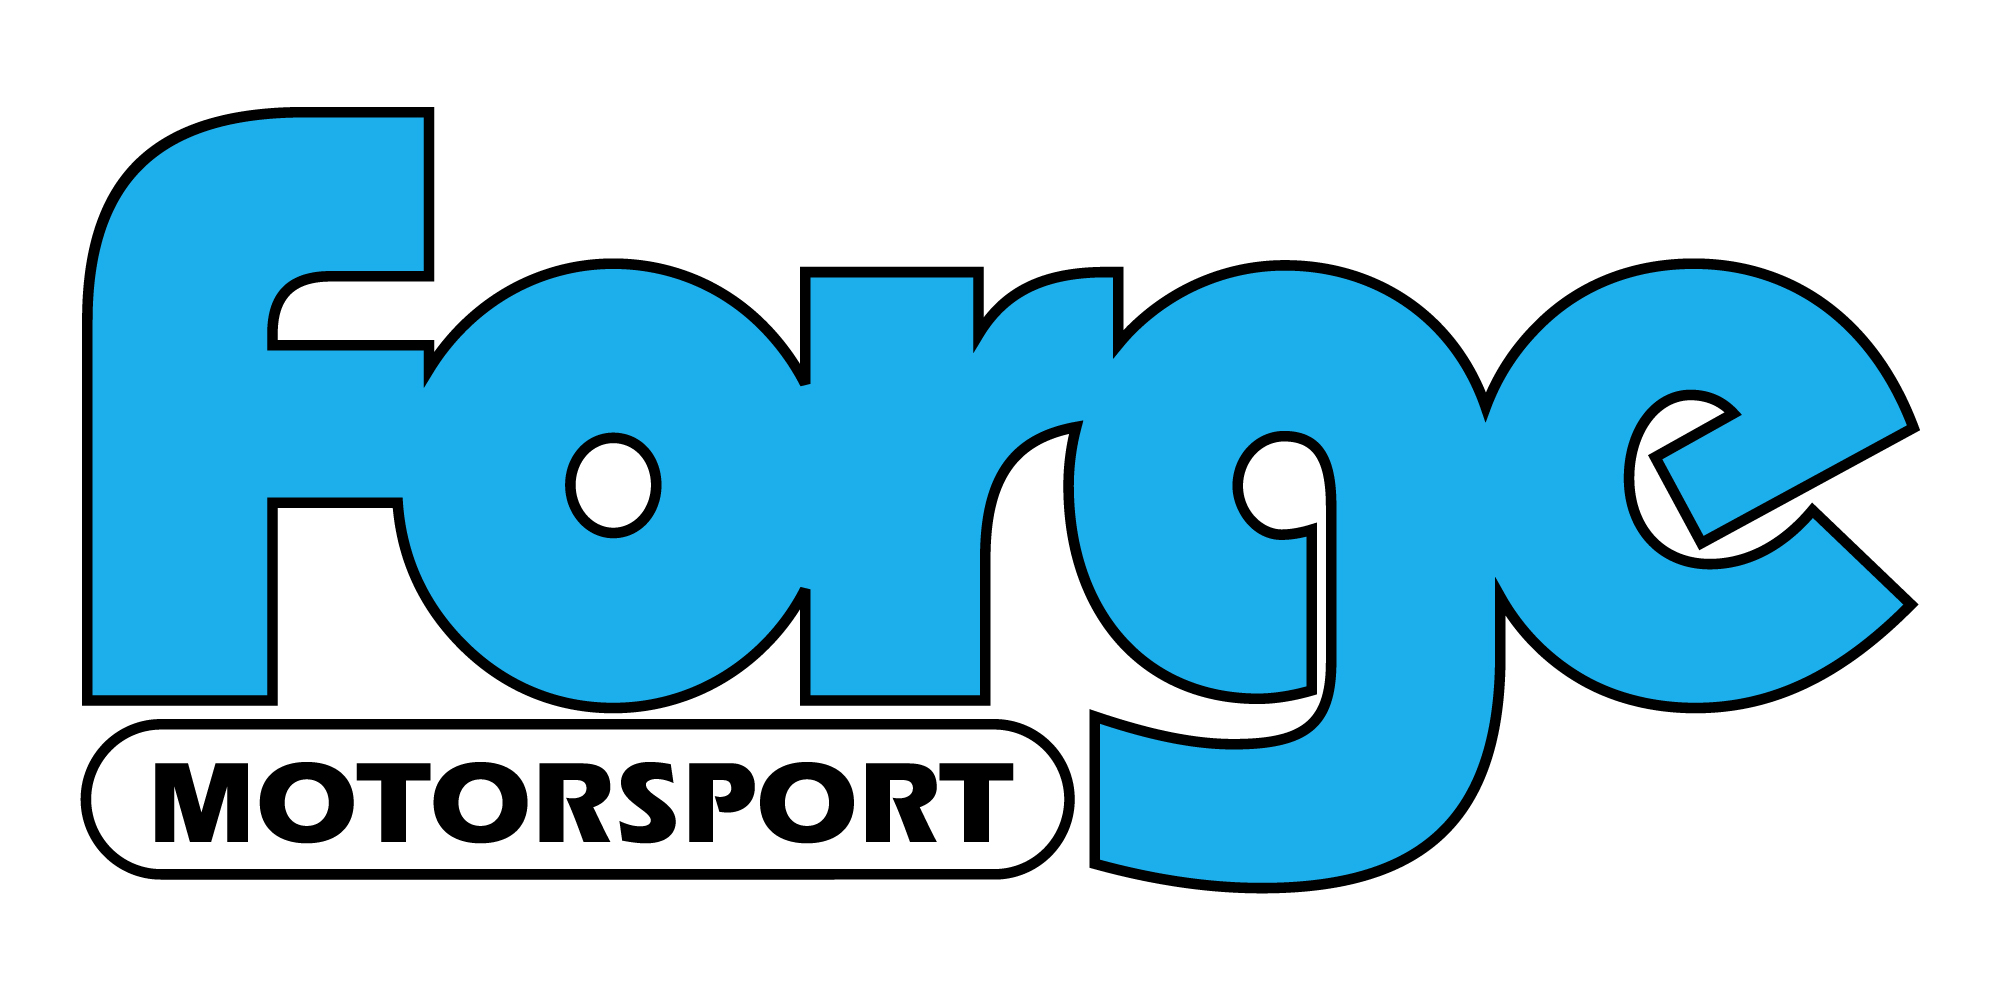 Forge Motorsport Asia